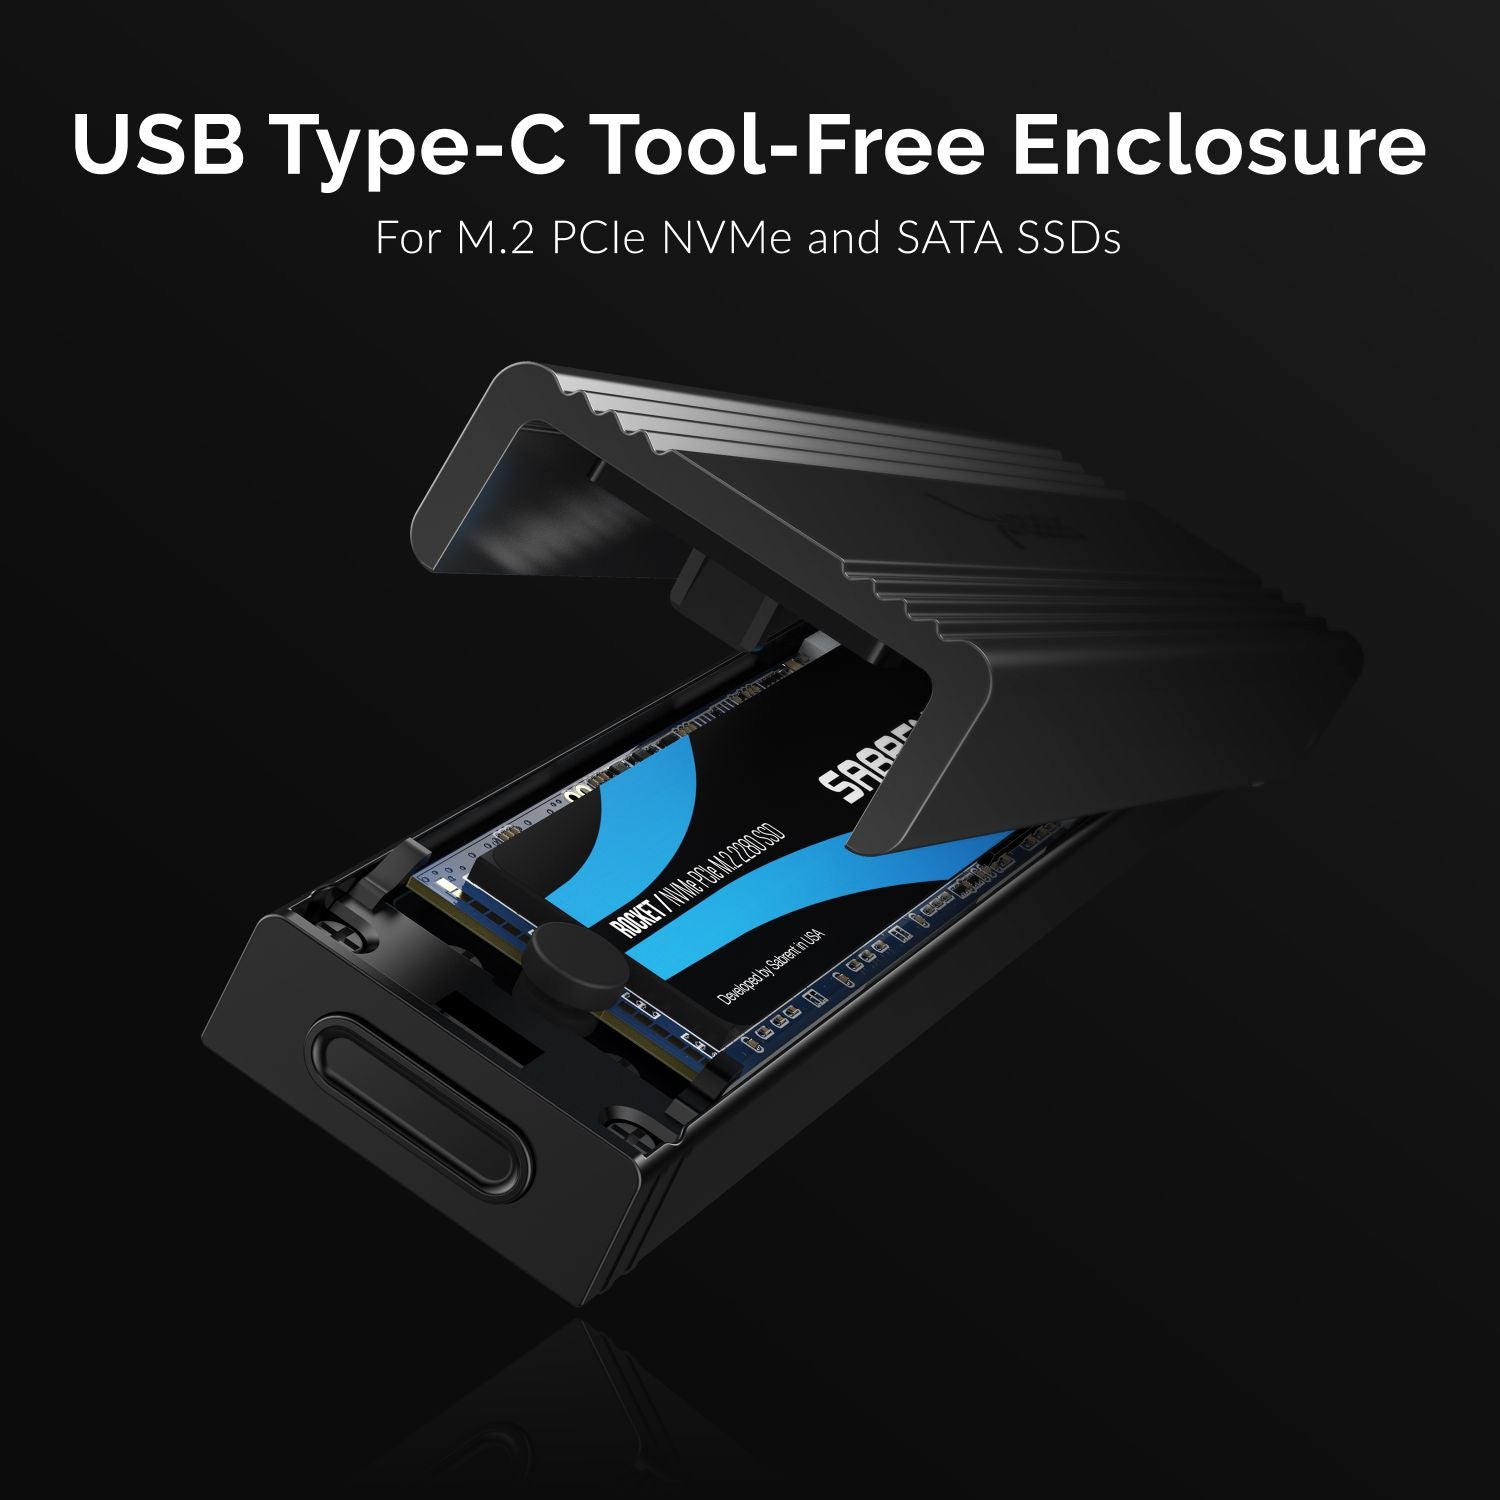 via ris Evolve USB 3.2 Type-C Tool-Free Enclosure for M.2 PCIe NVMe and SATA SSDs - Sabrent